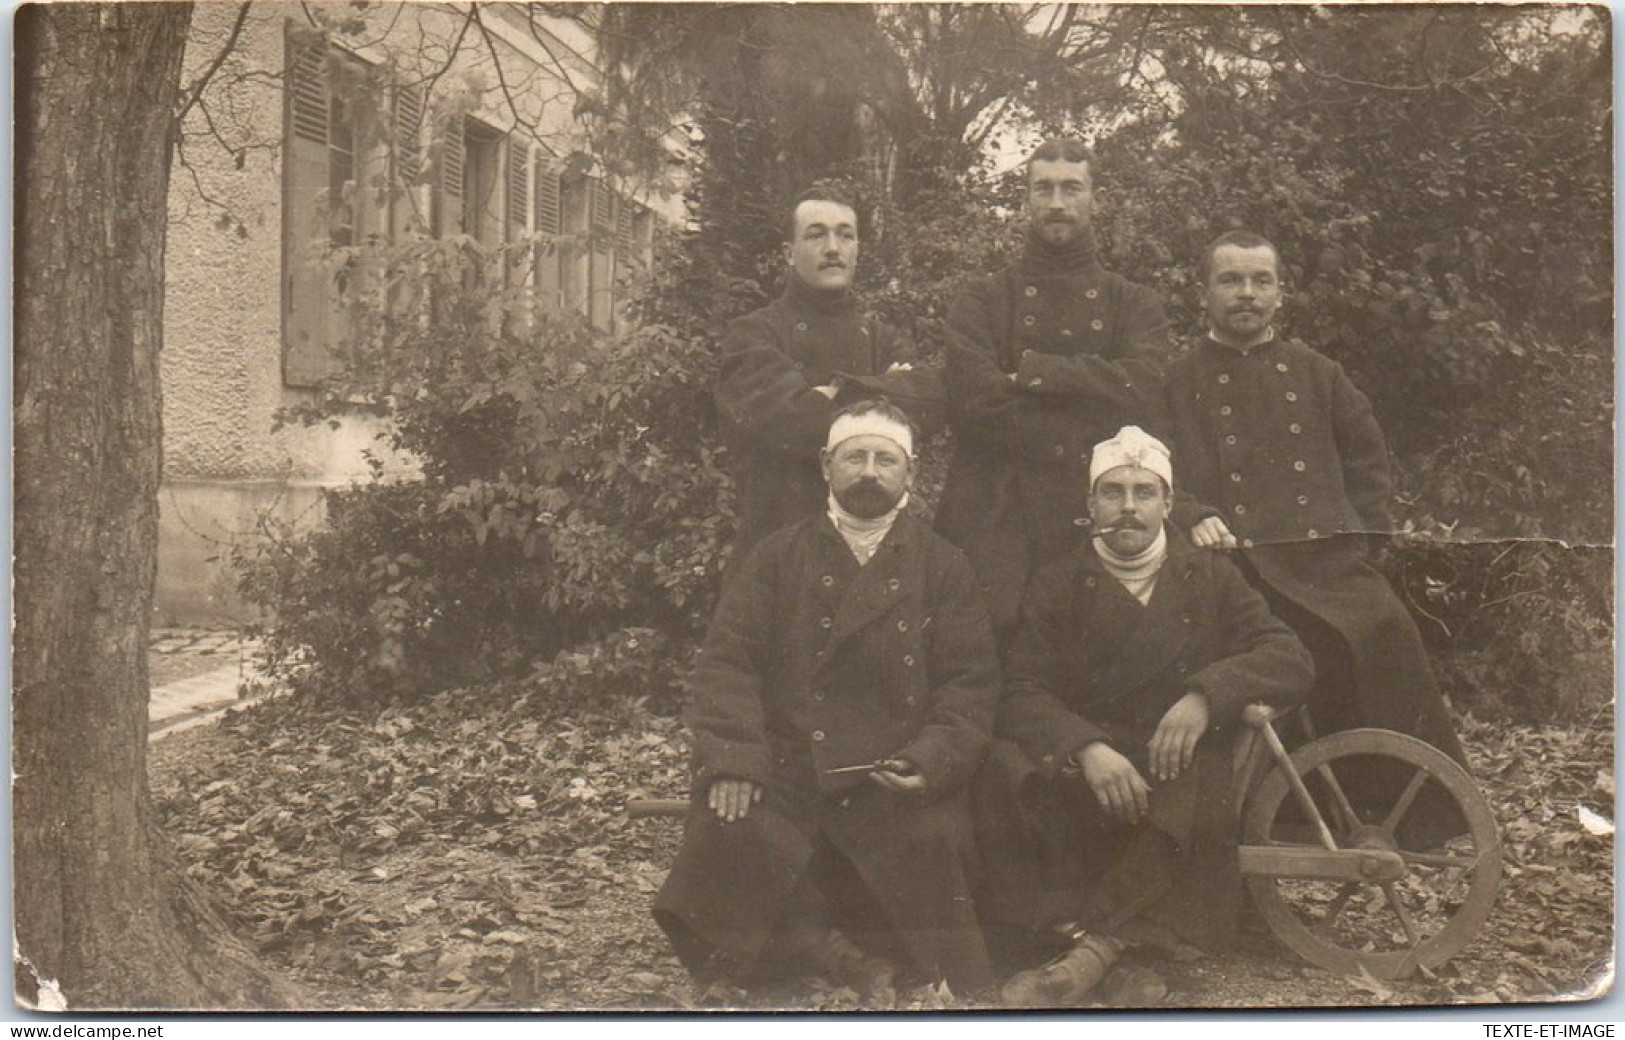 77 MELUN - CARTE PHOTO - Hopital Complementaire Oct 1914 - Melun